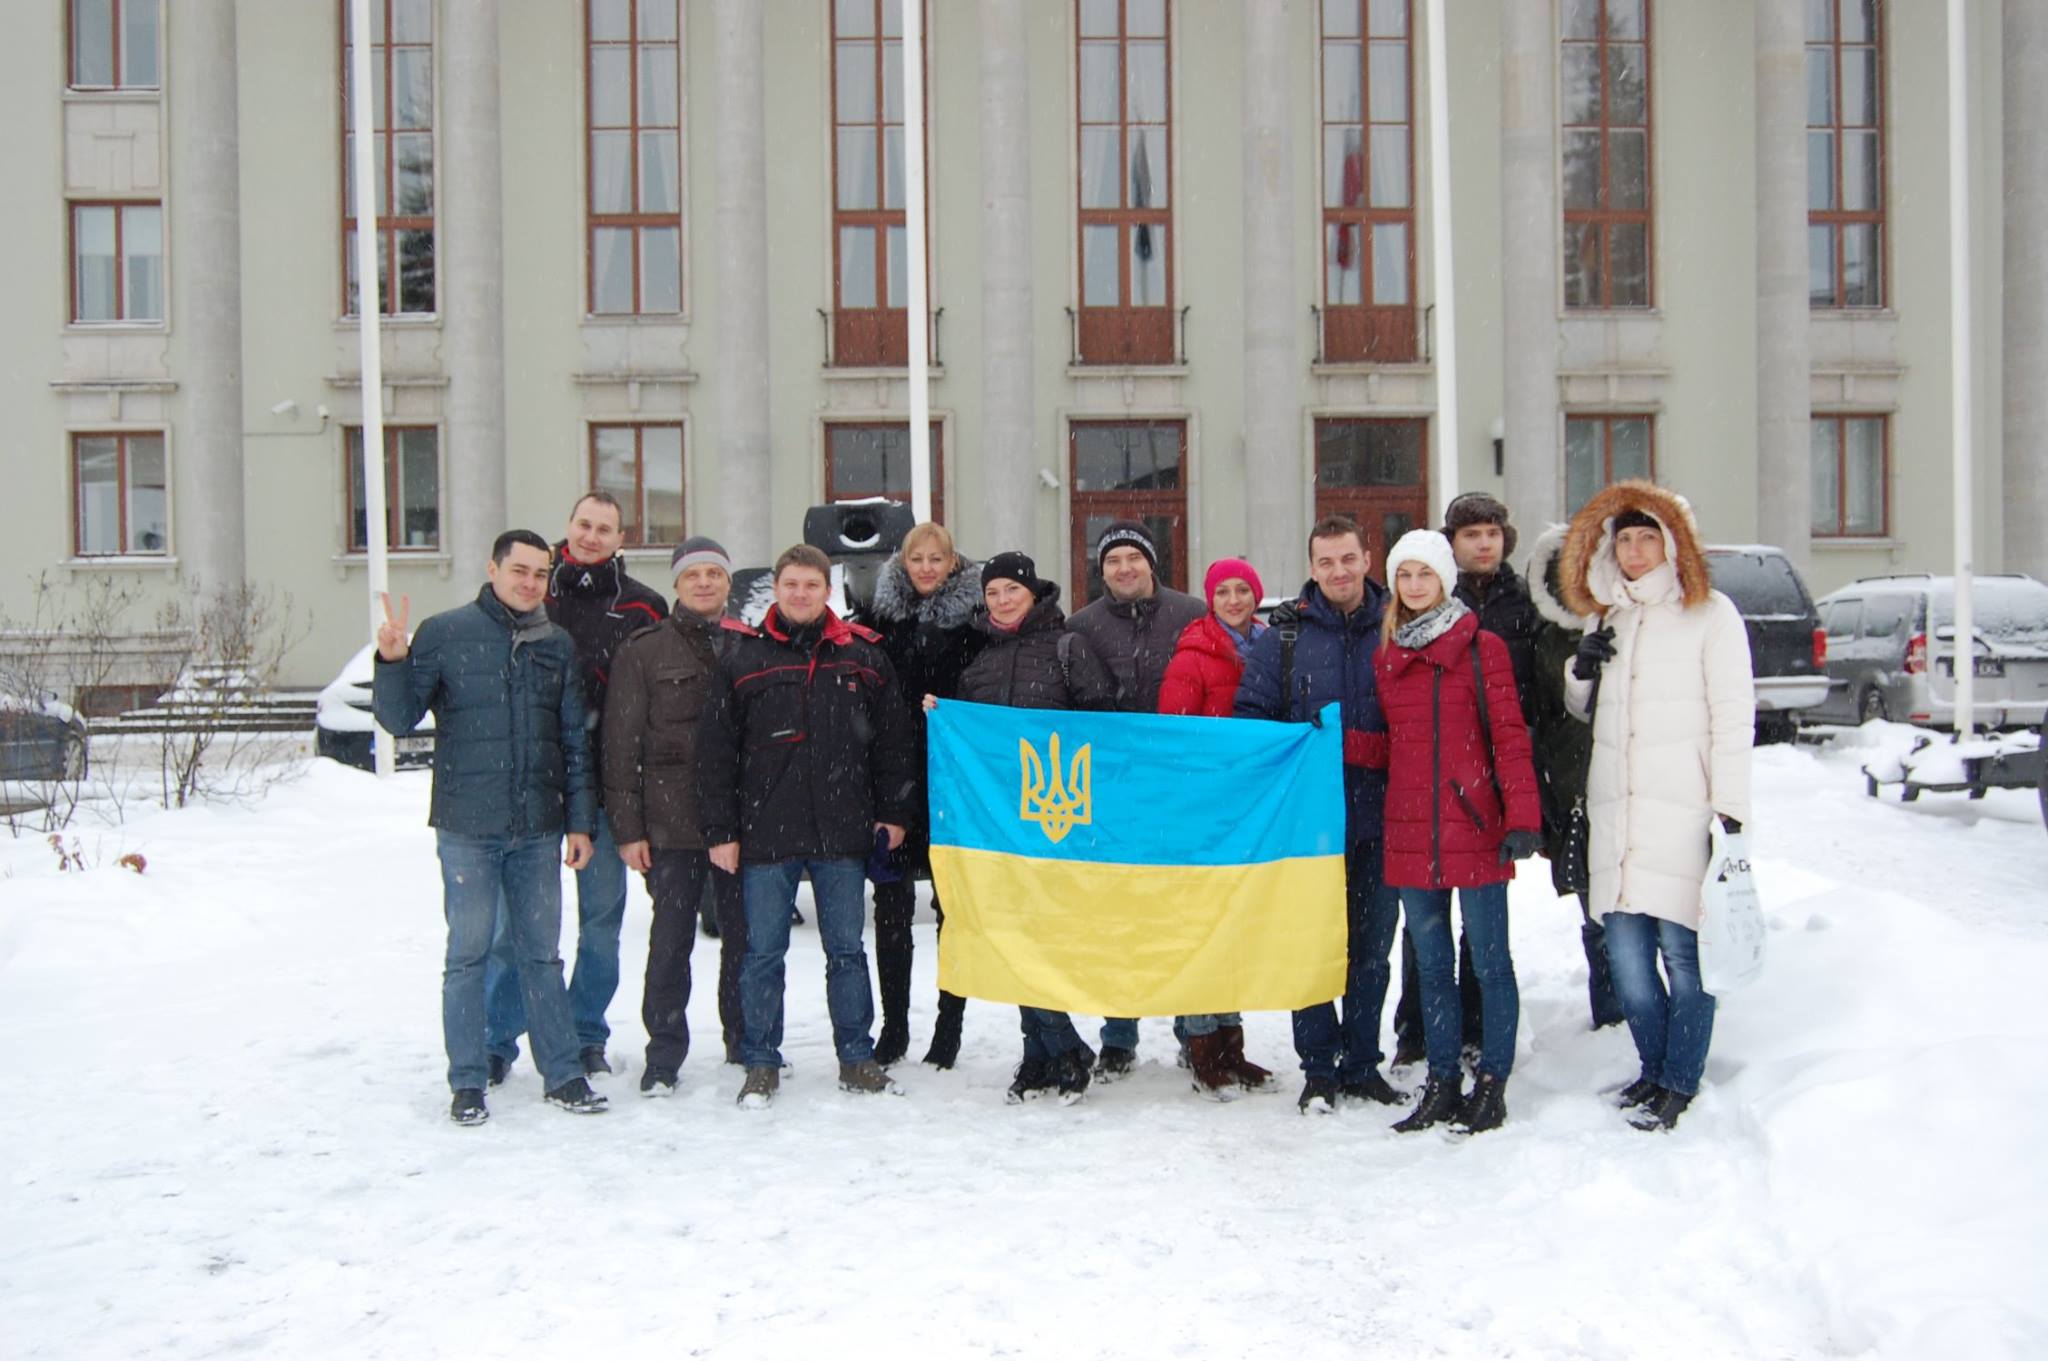 Three years of Estonian support for Ukraine. The story of Vaba Ukraina ~~